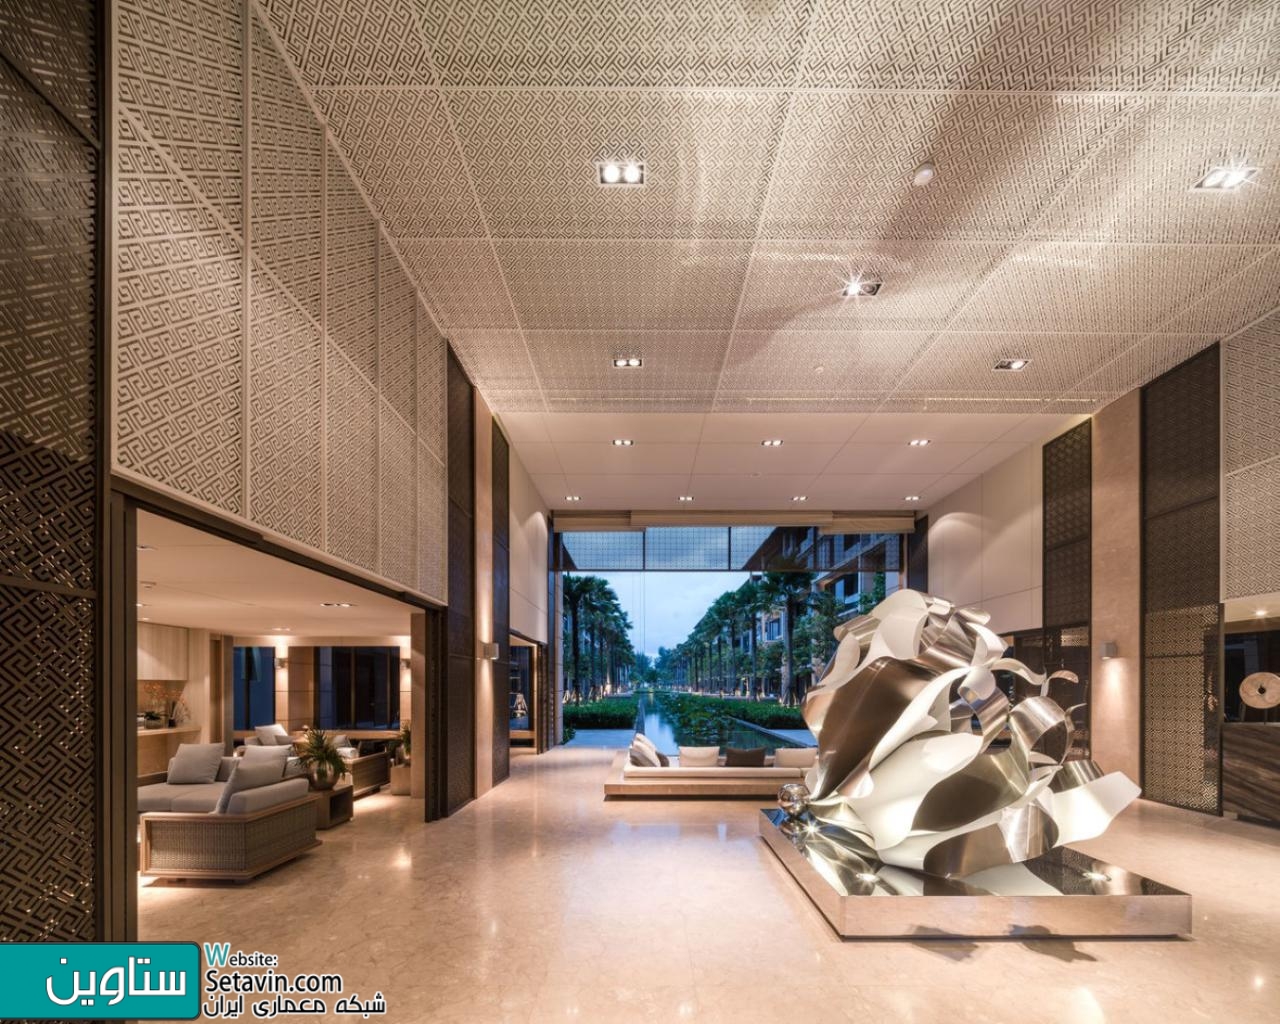 هتل BMK – BAAN MAI KHAO ، اثر تیم طراحی seARCHOFFICE ، تایلند